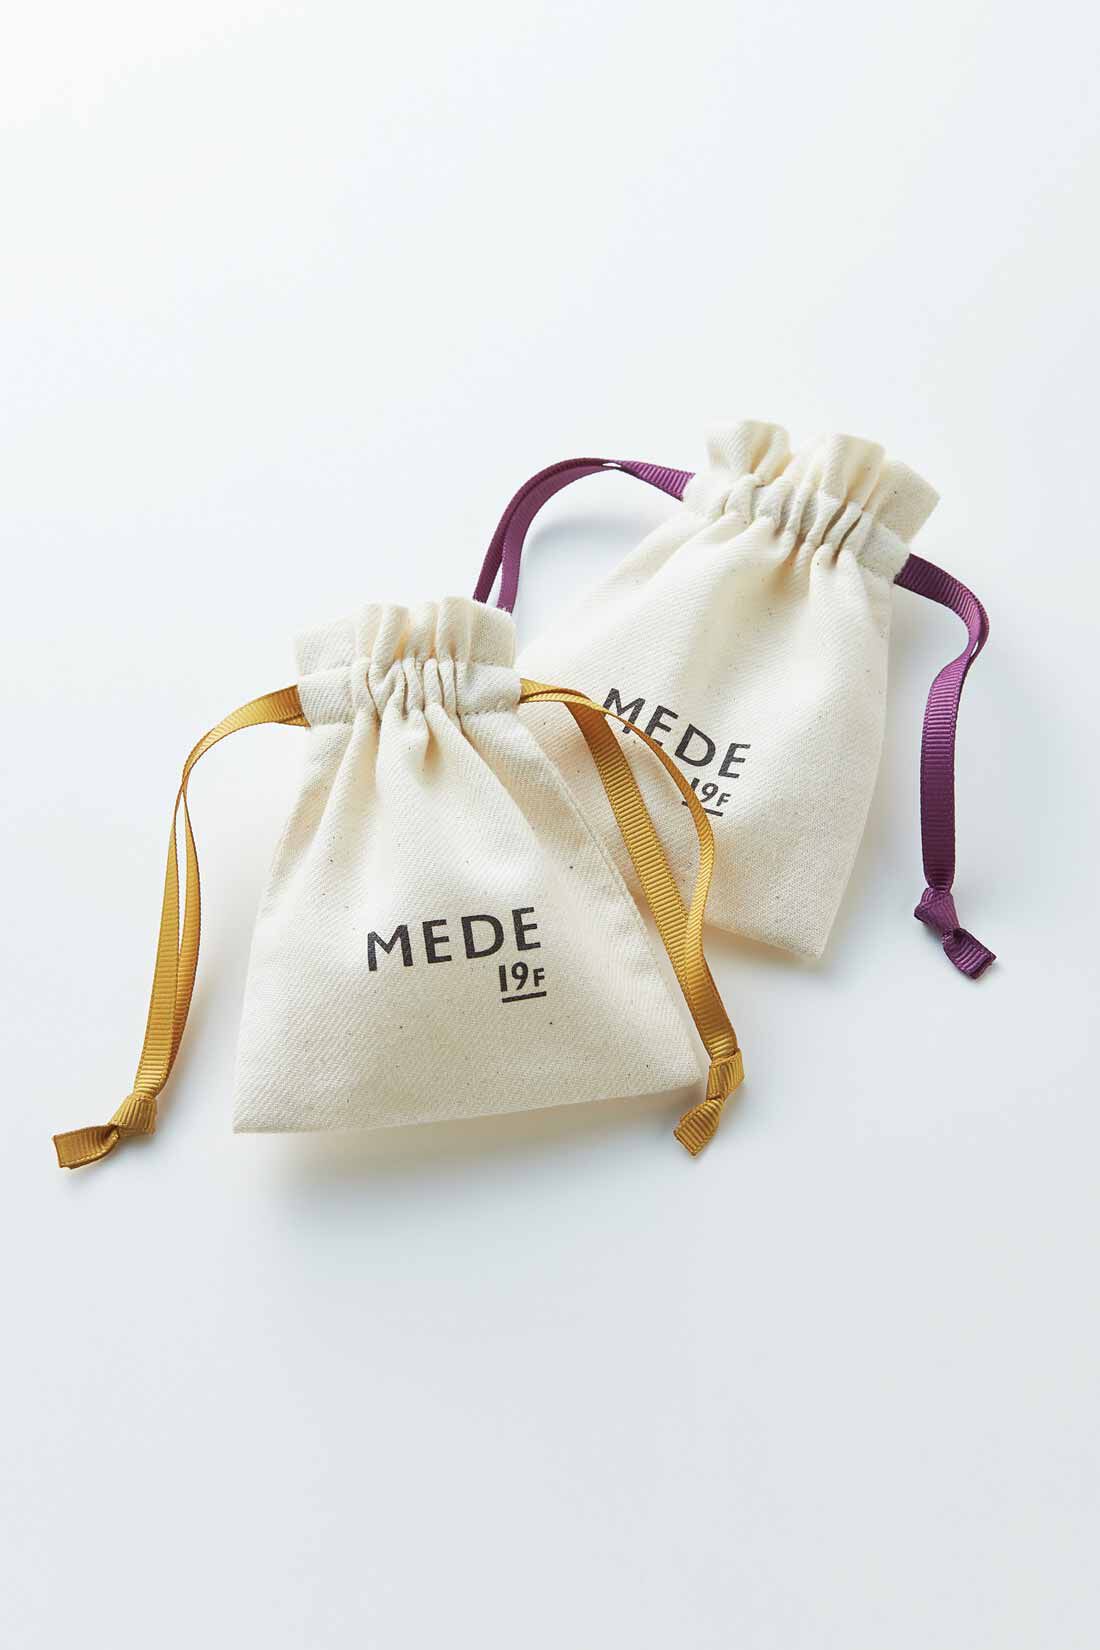 MEDE19F|YPAC for MEDE19F　フランス製陶器ボタンイヤリング type.09|MEDE19Fオリジナルきんちゃくに入れてお届けします。